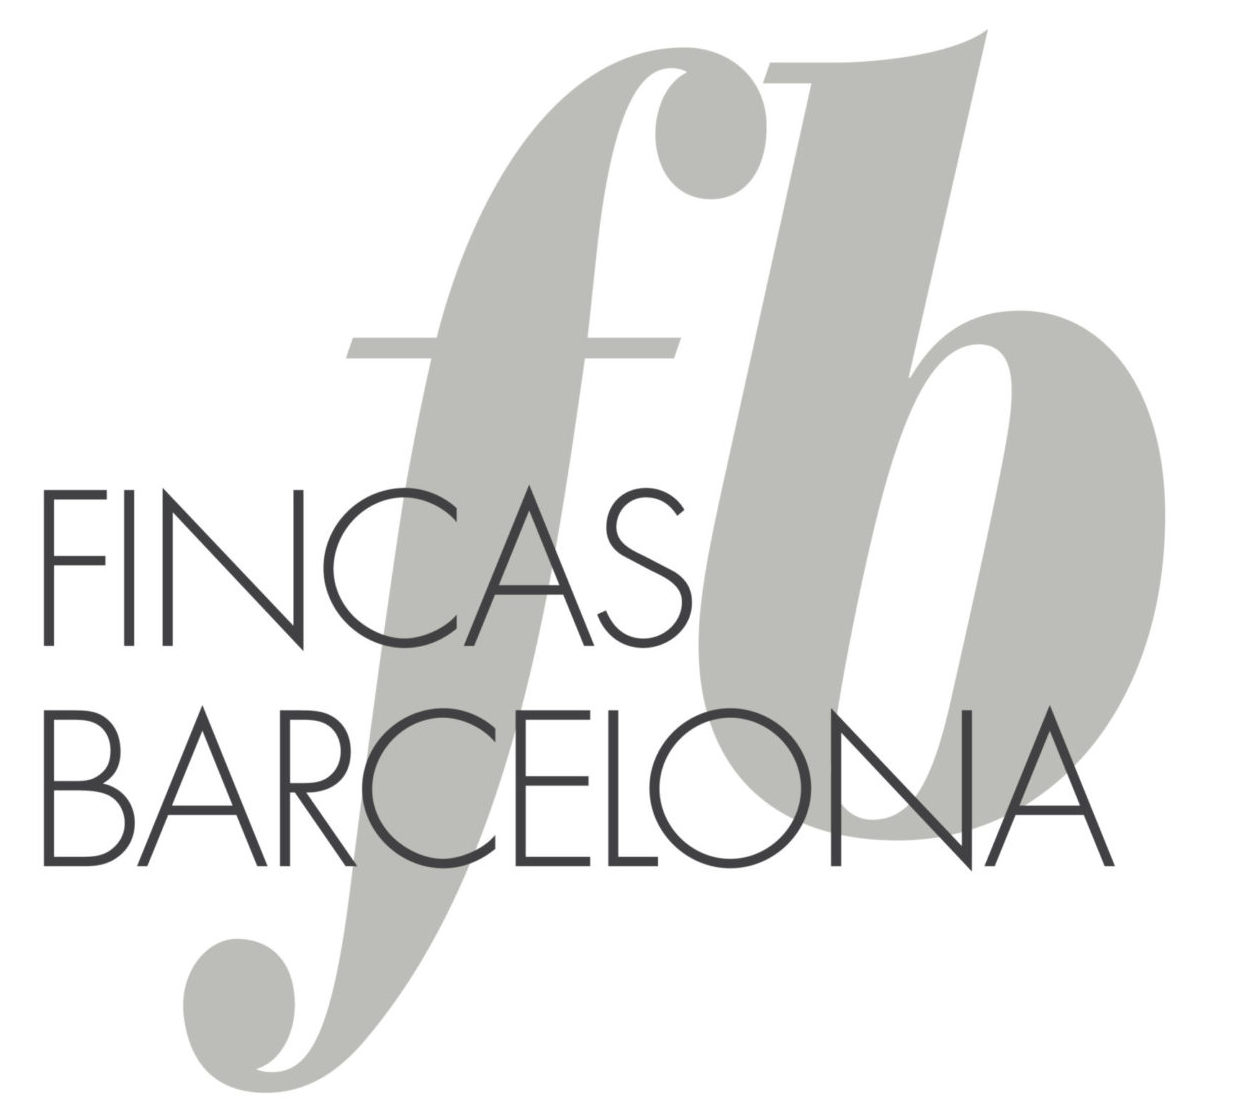 Fincas Barcelona